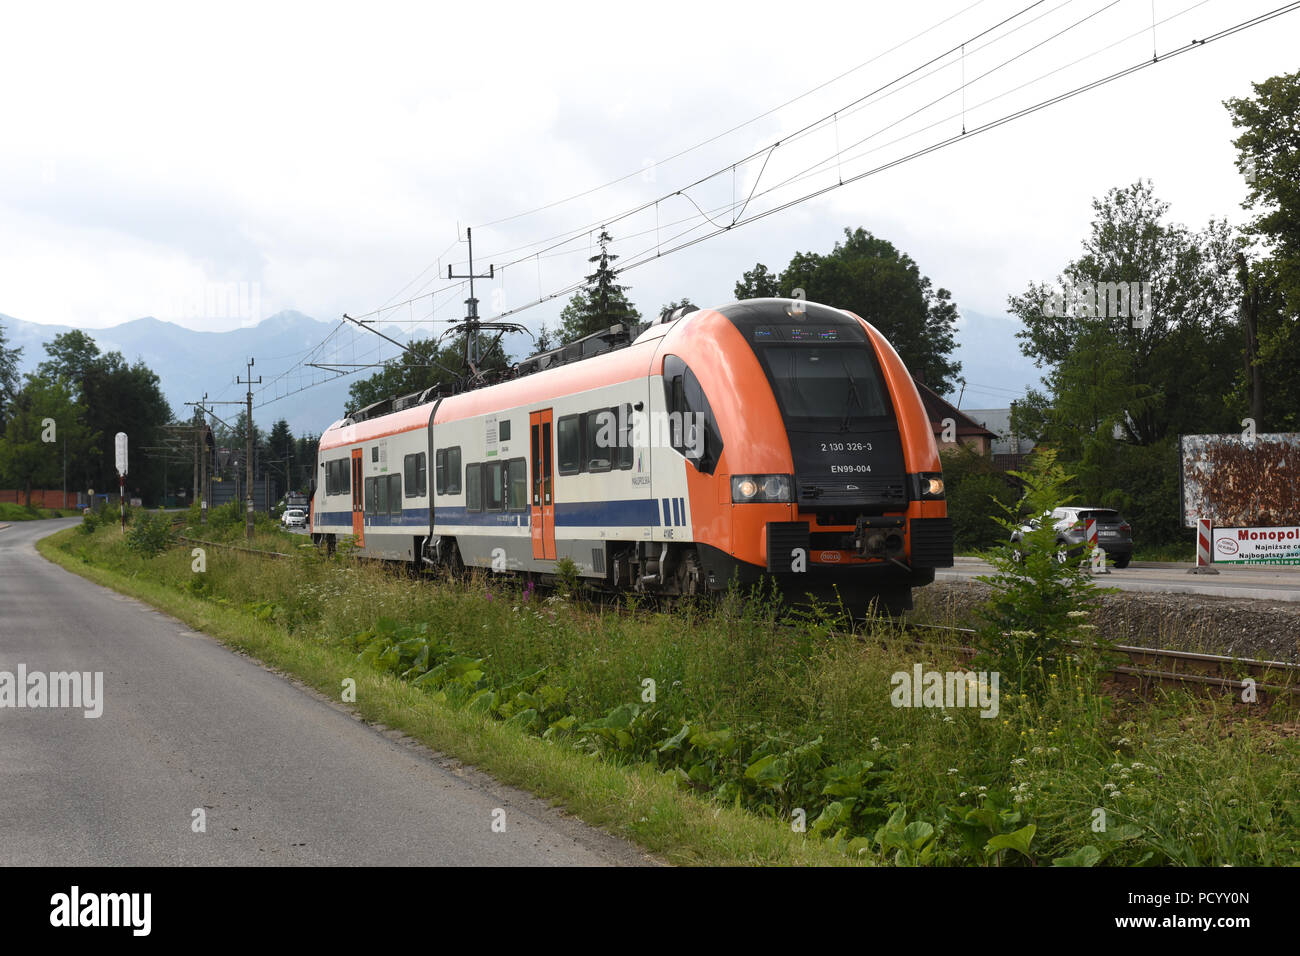 Electric train locomotive at Poronin near Zakopane Poland Stock Photo